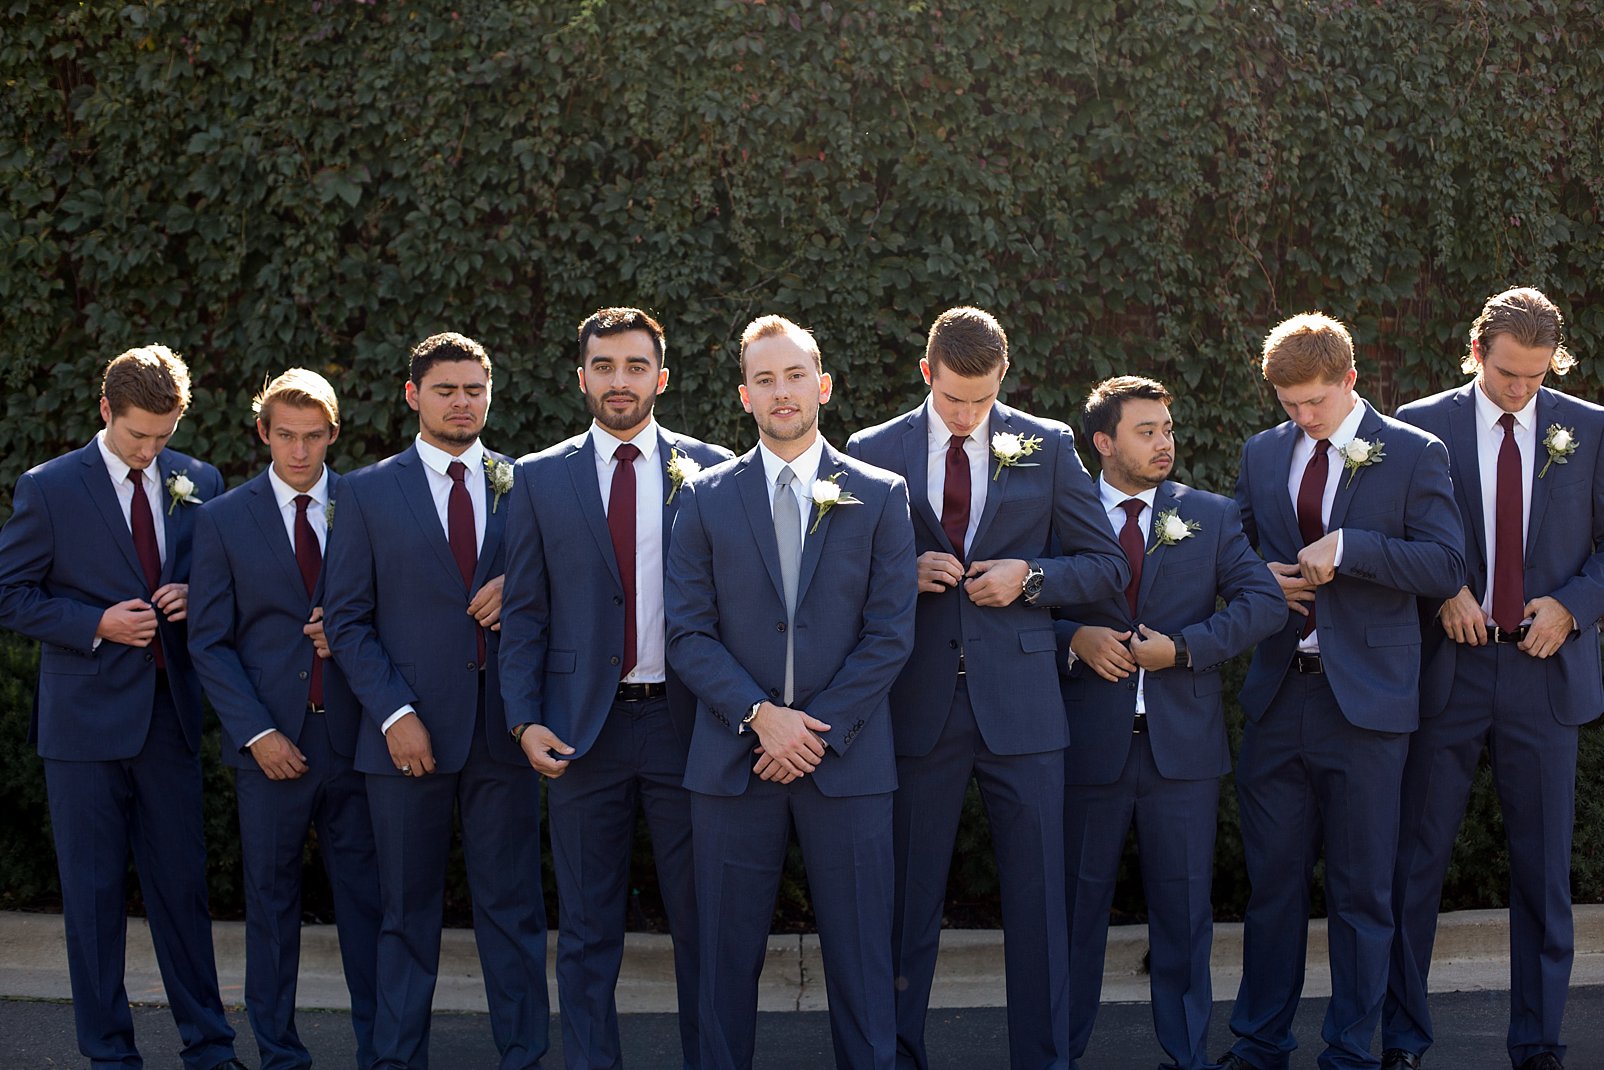 groomsmen photography at denver wedding